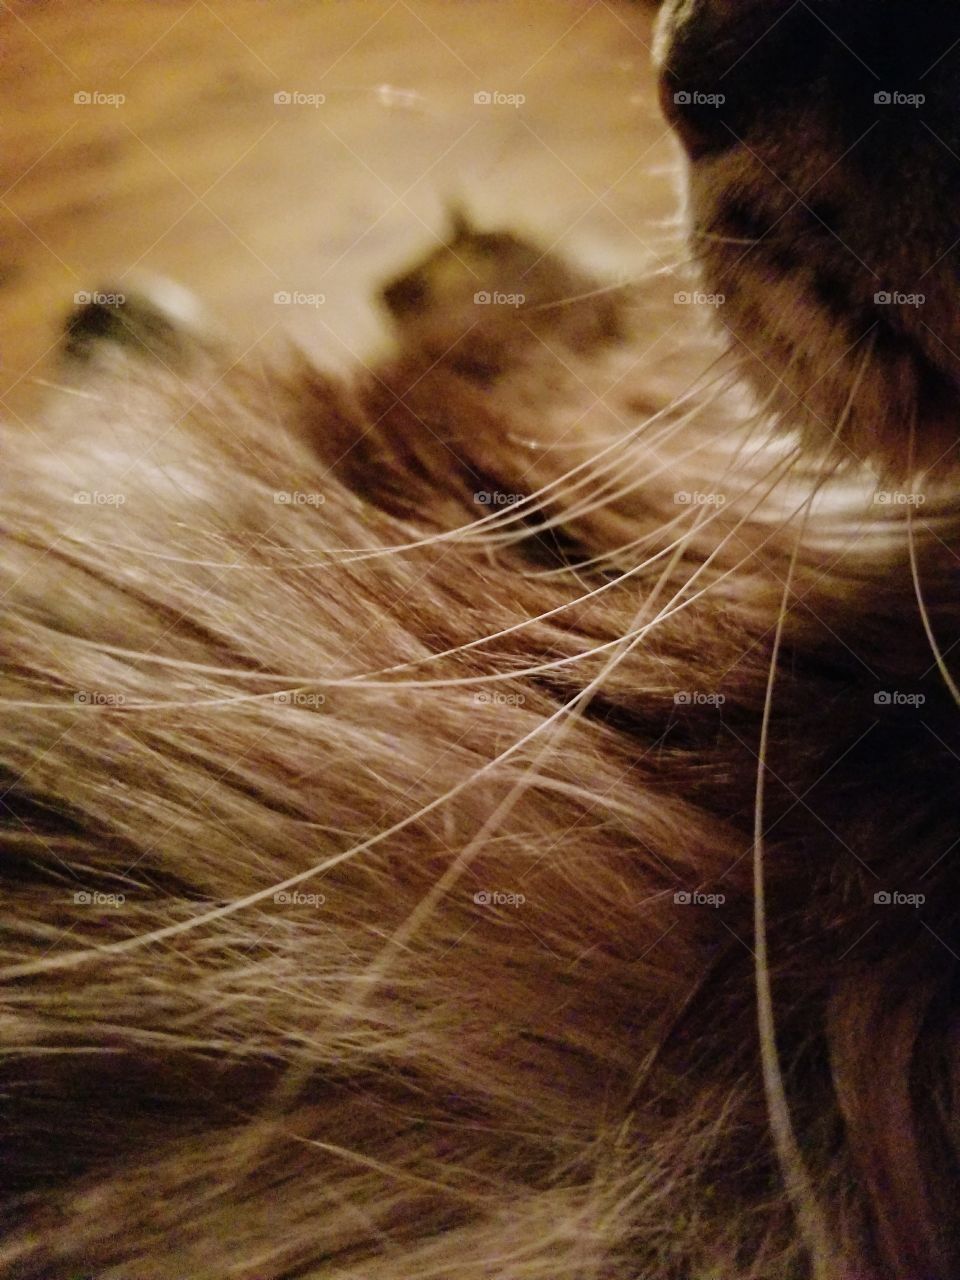 Whiskers on Kittens